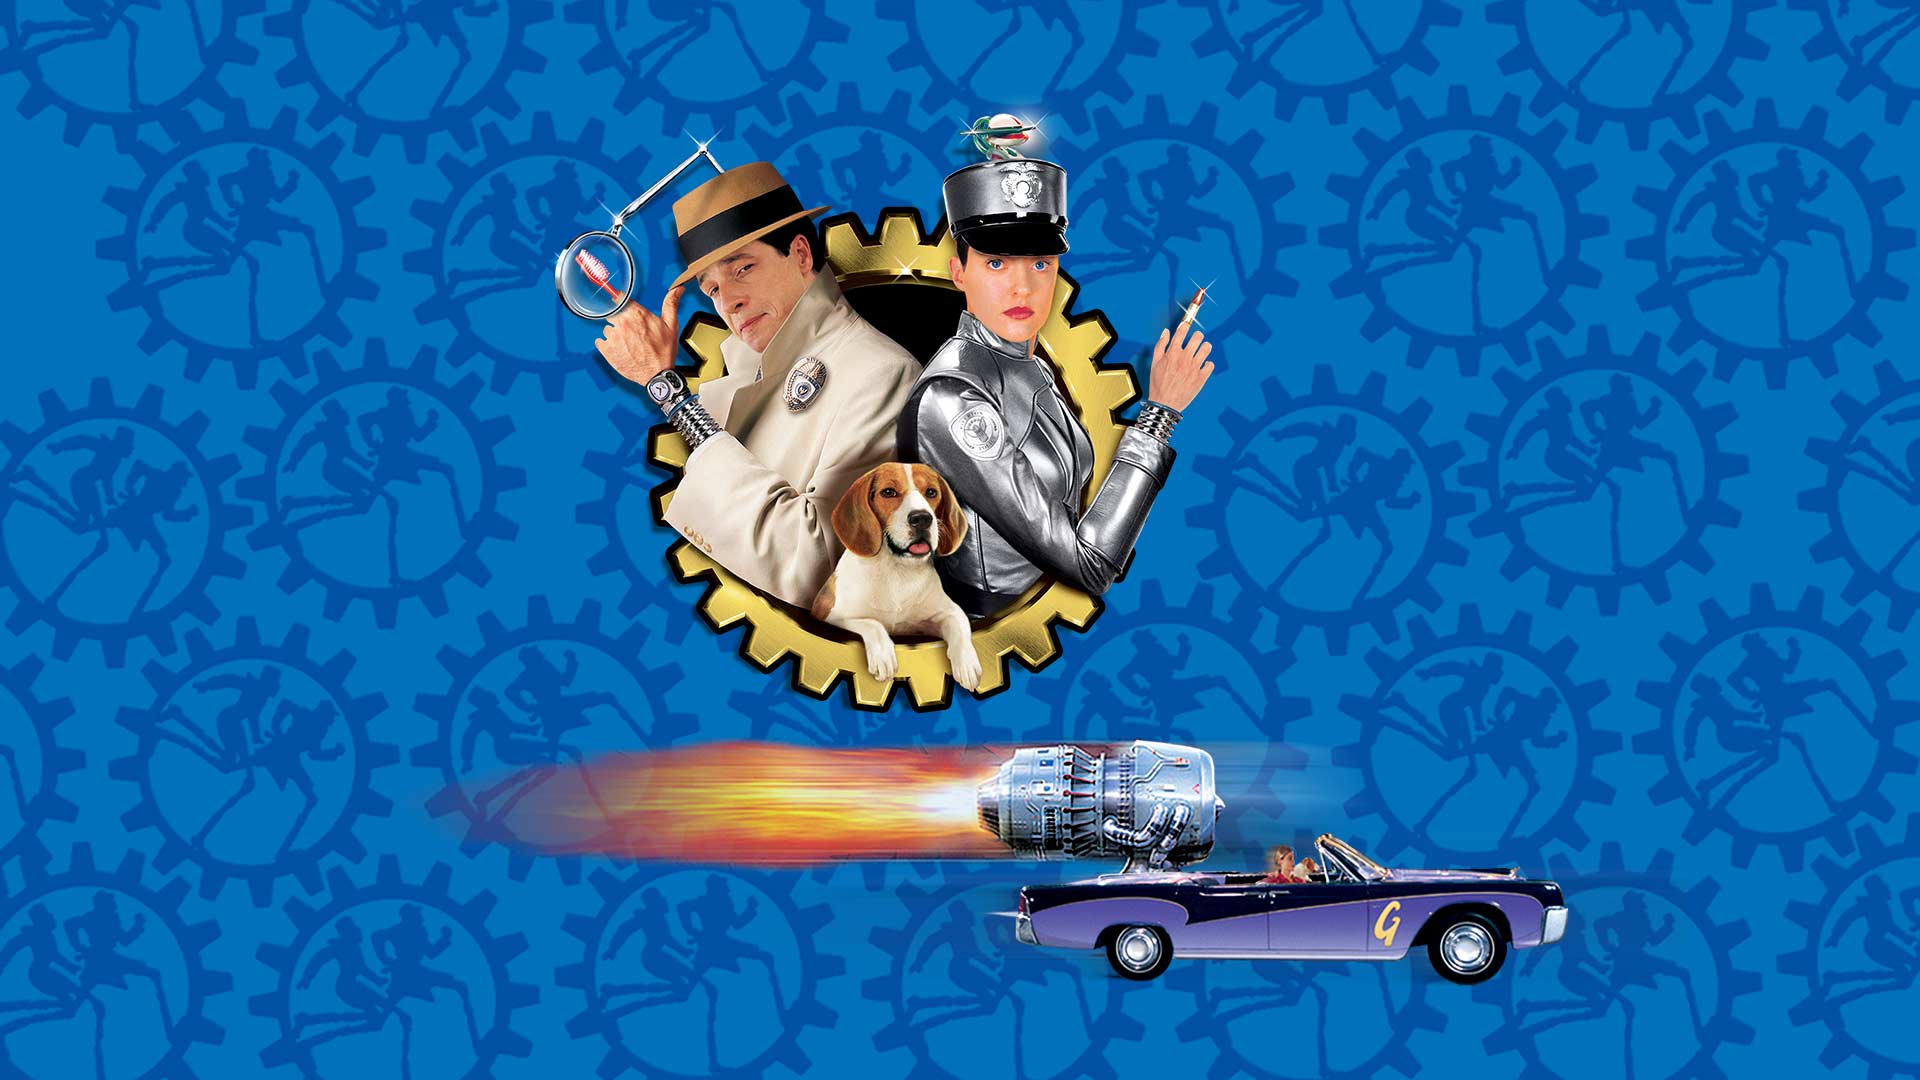 Inspector Gadget 2 Screensaver : Disney : Free Download, Borrow